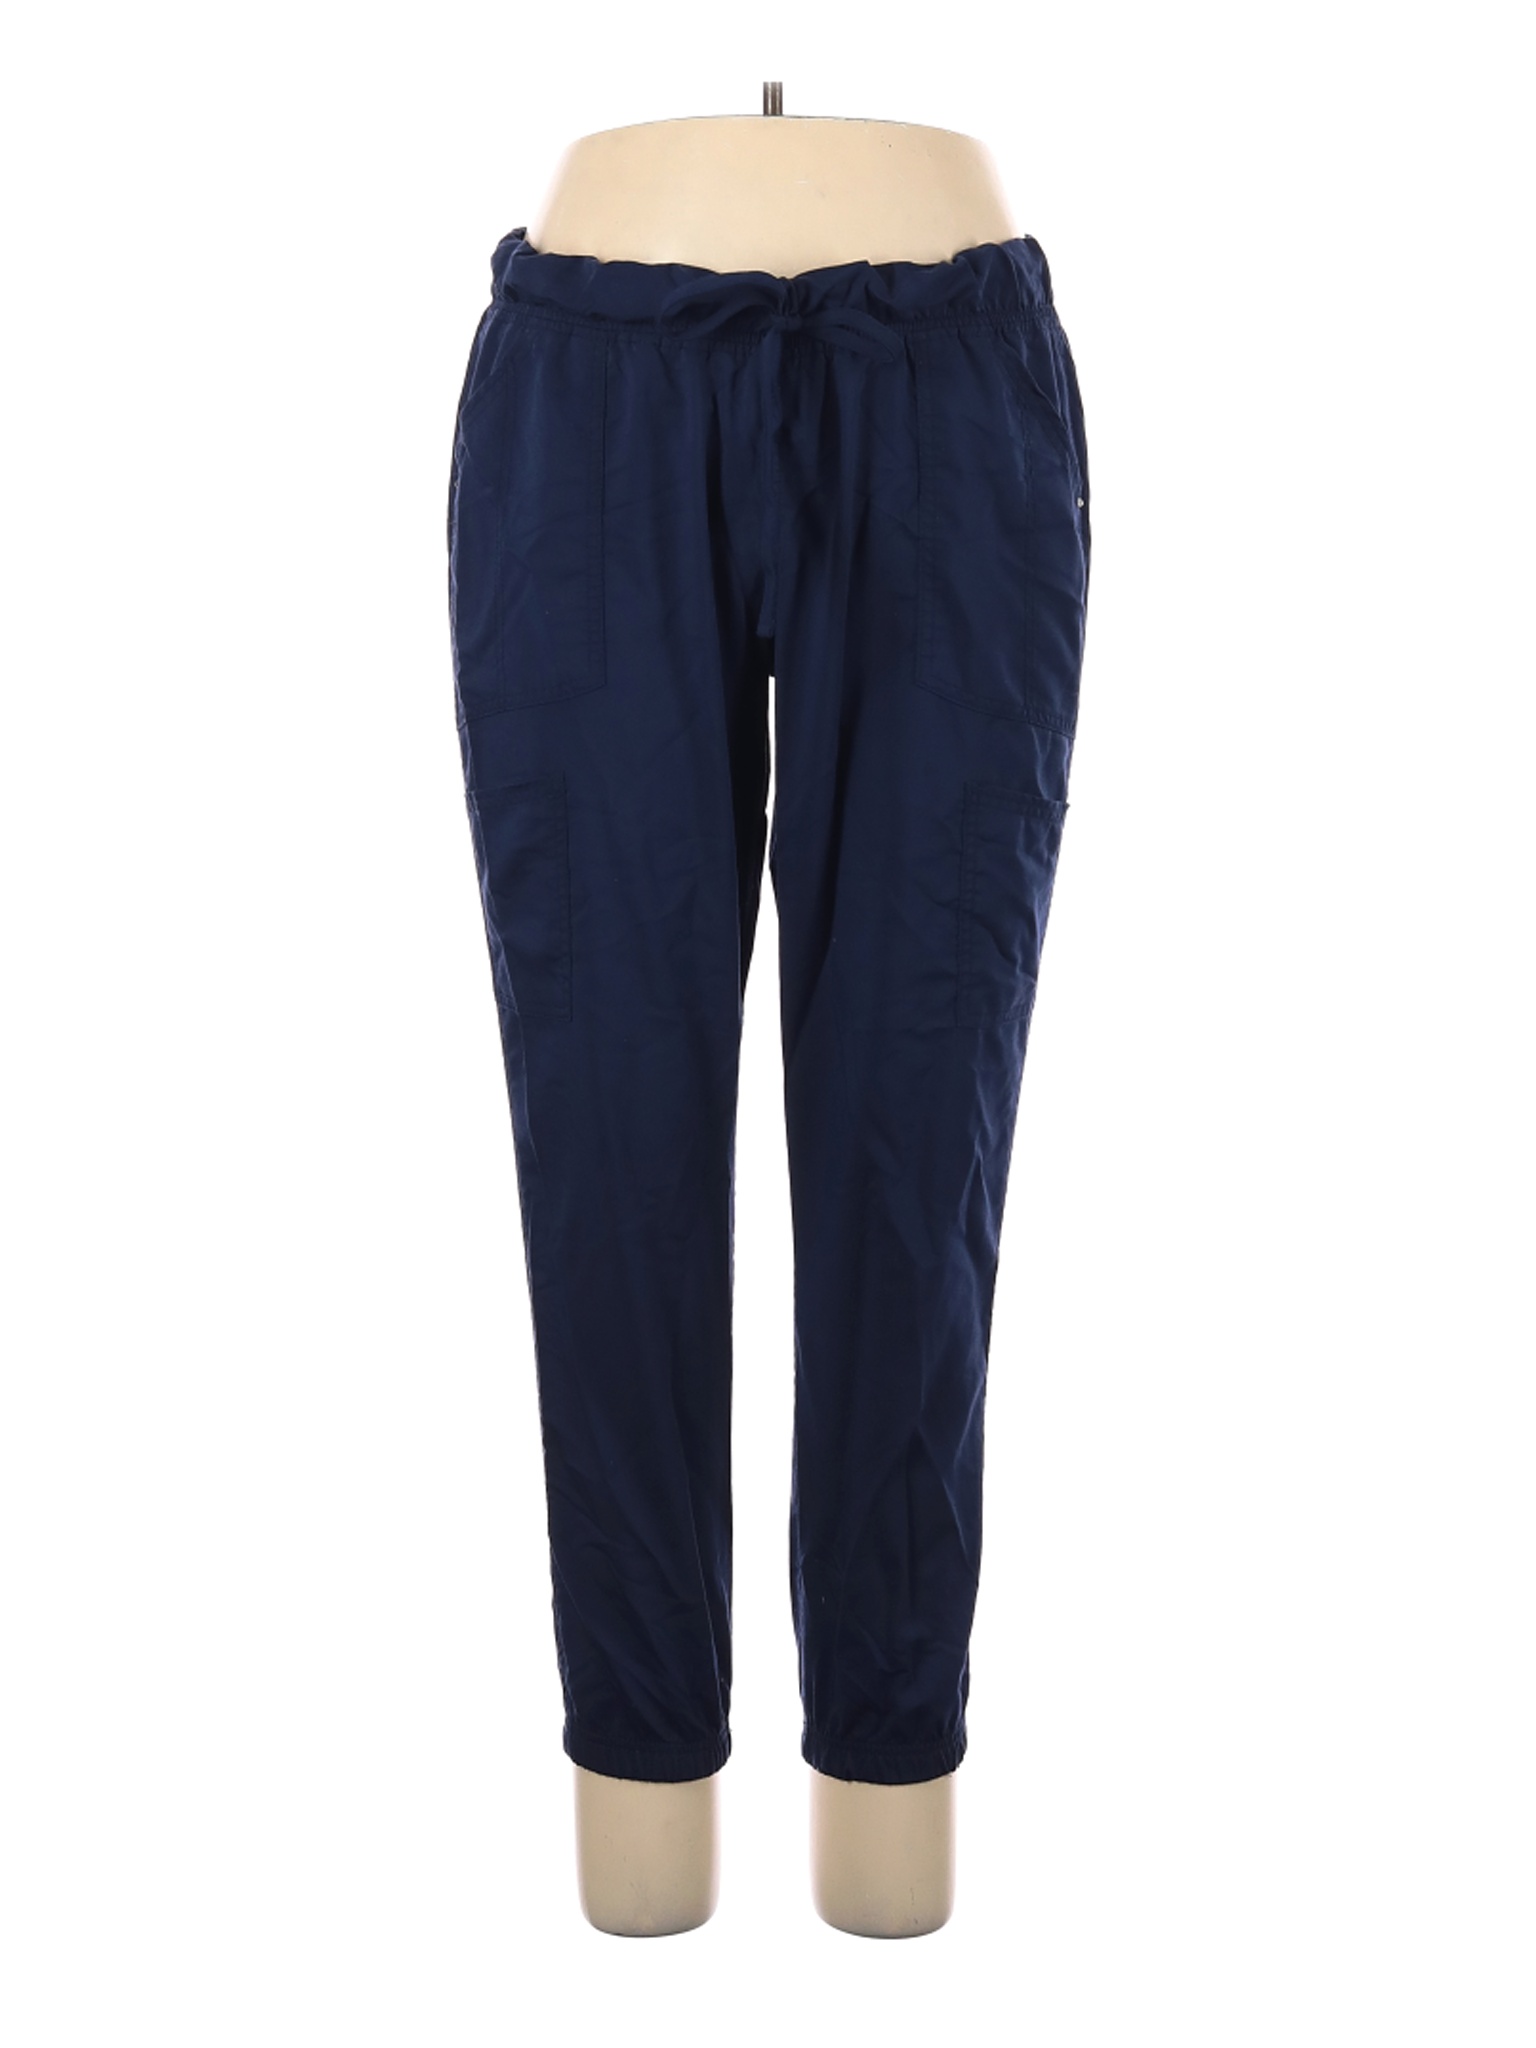 Assorted Brands Women Blue Casual Pants L | eBay